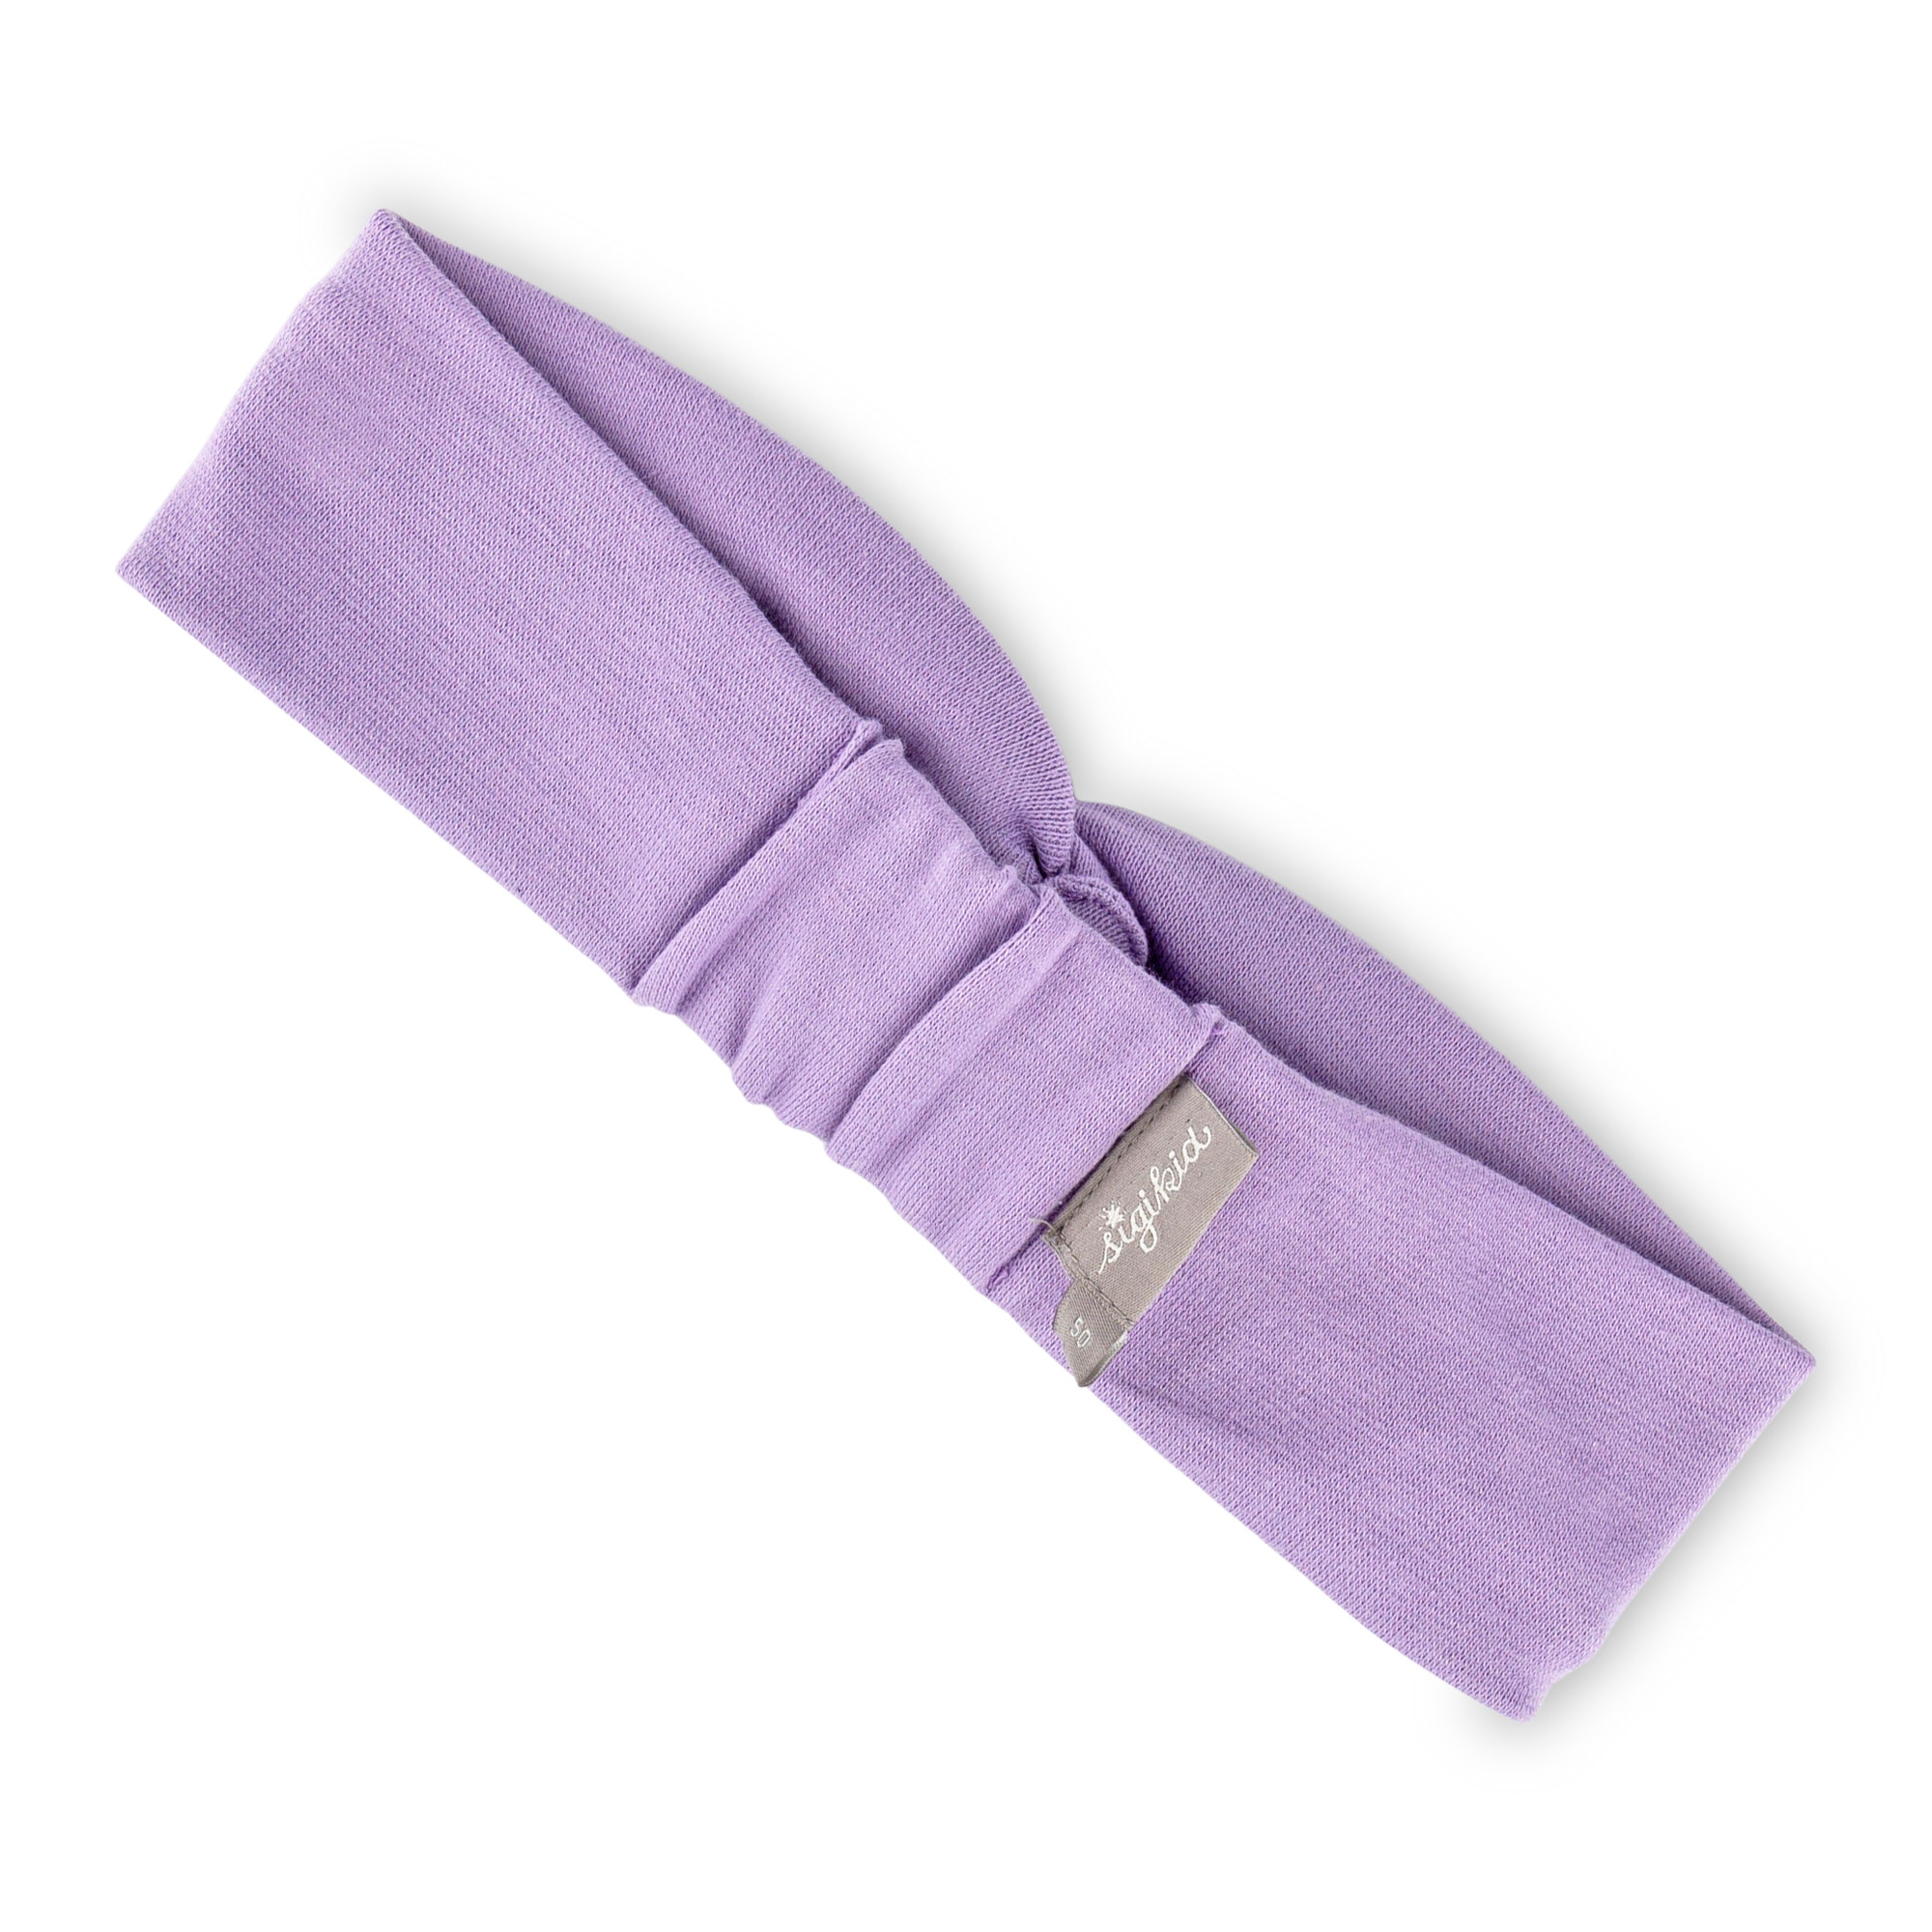 Girls' knot detail headband, lilac